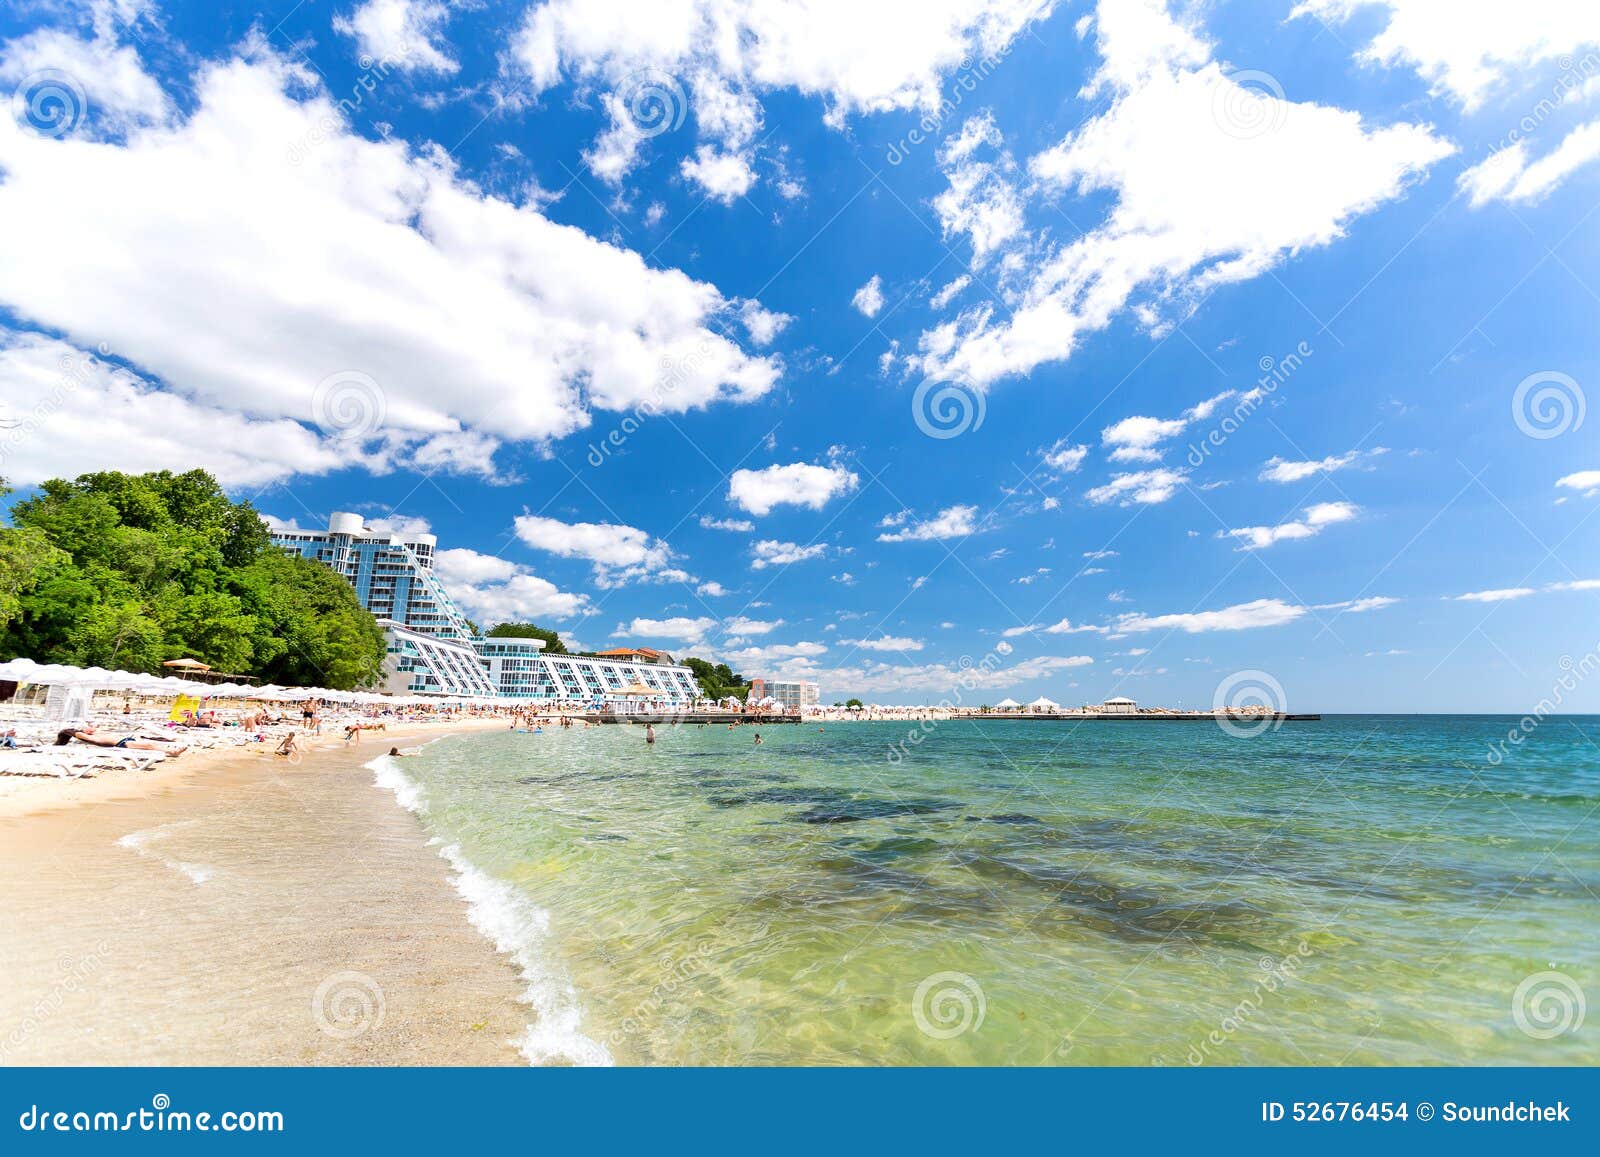 Varna beach on Black sea stock photo. Image of sand, nature - 52676454